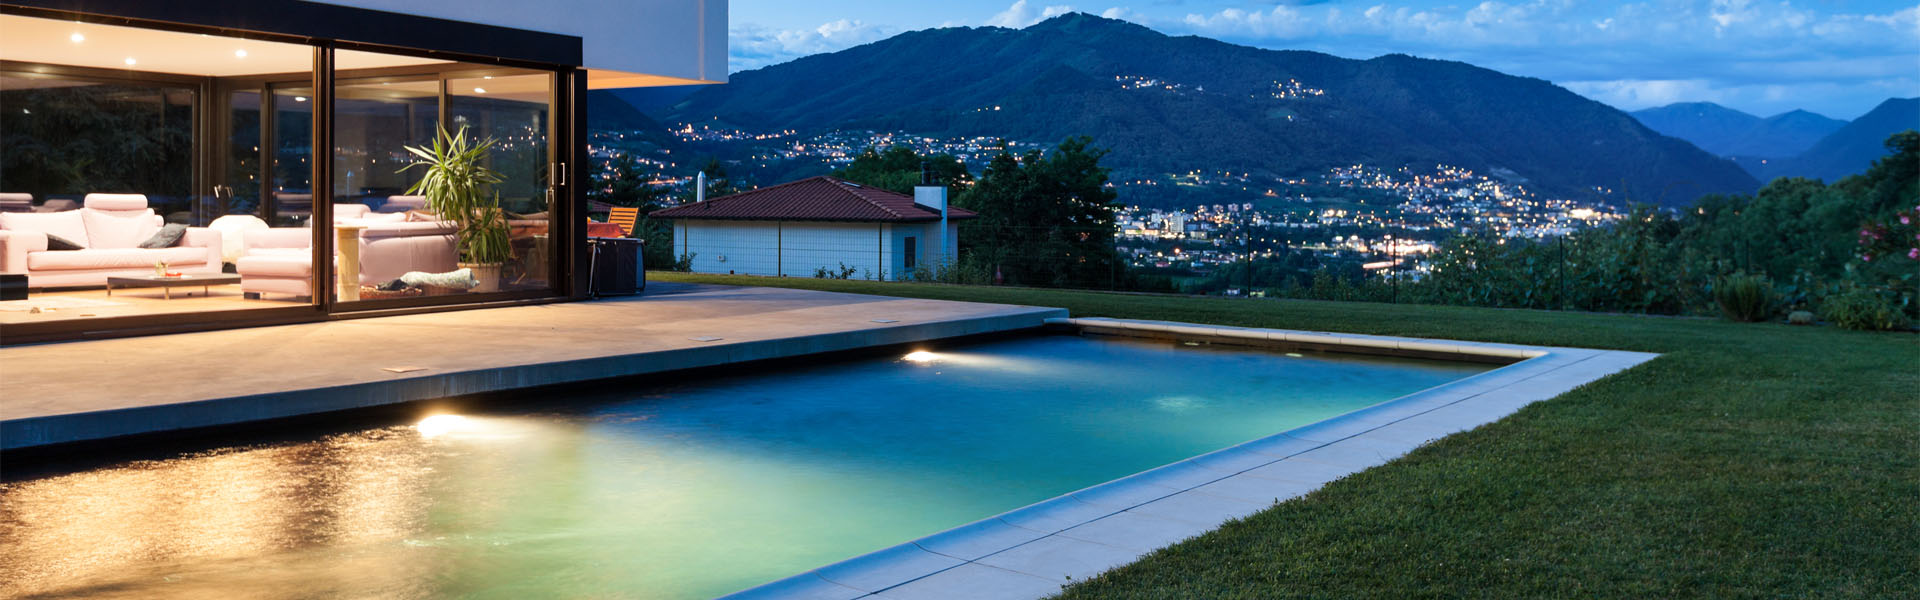 Pool Luxury House